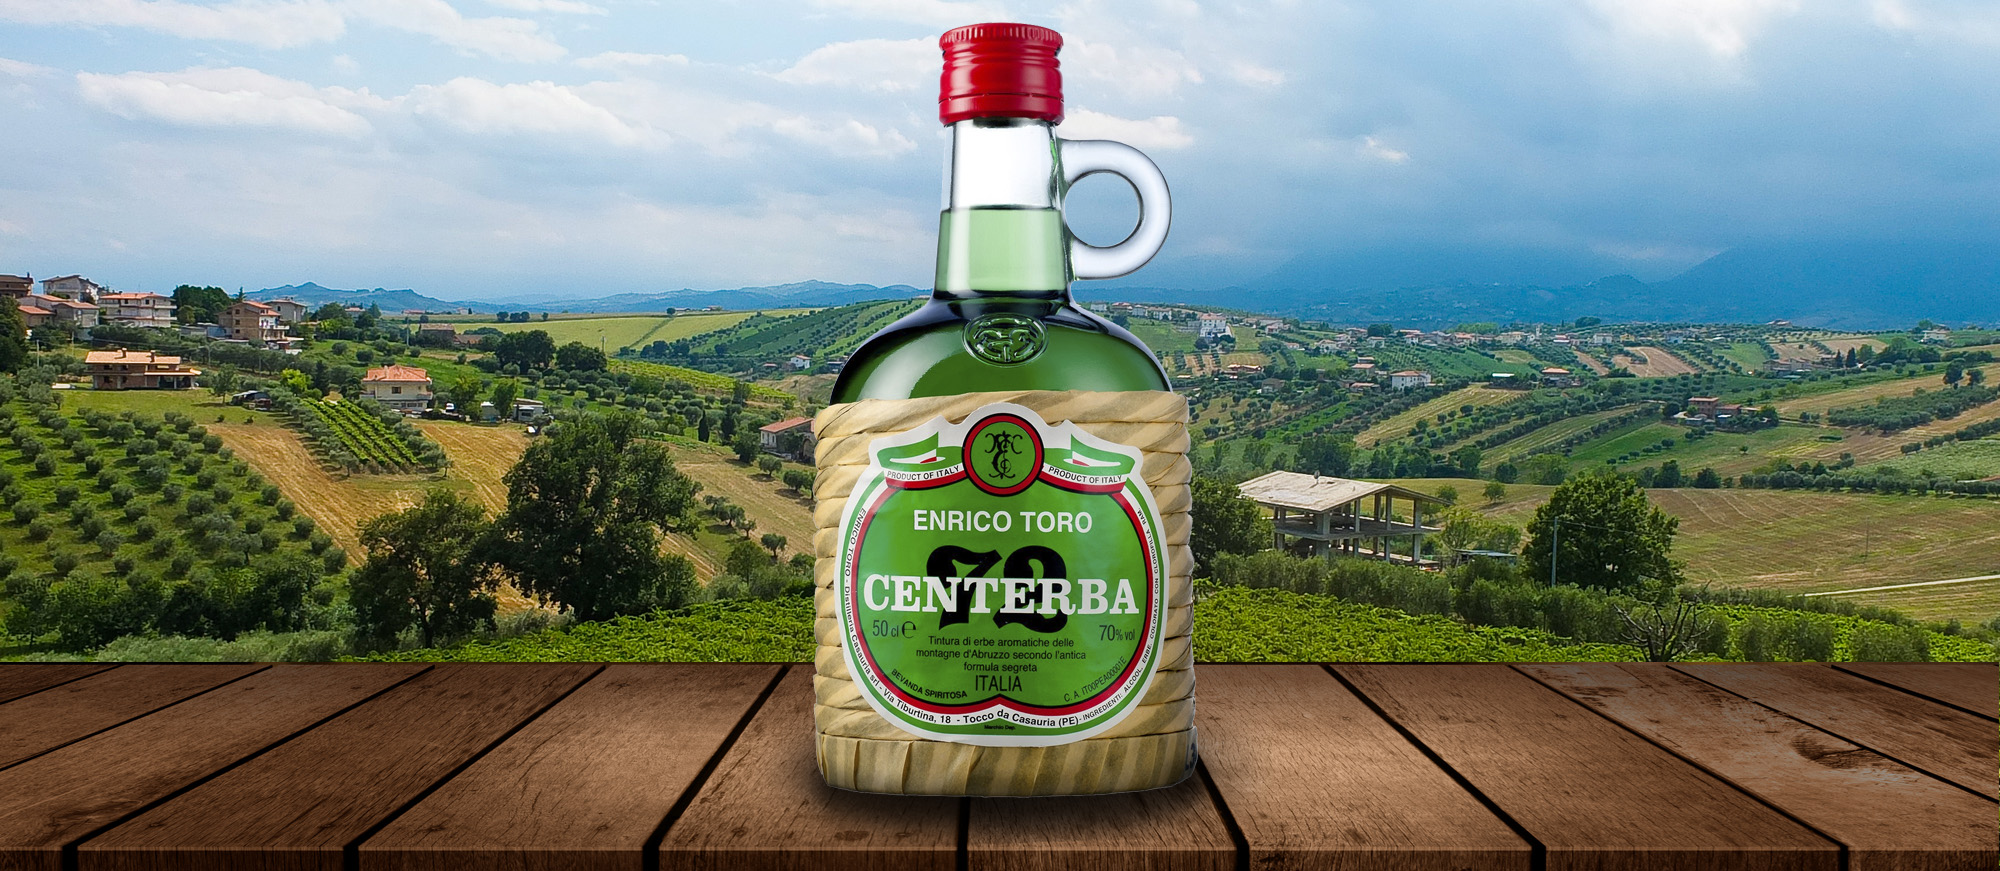 Centerba Local Herbal Liqueur From Abruzzo Italy